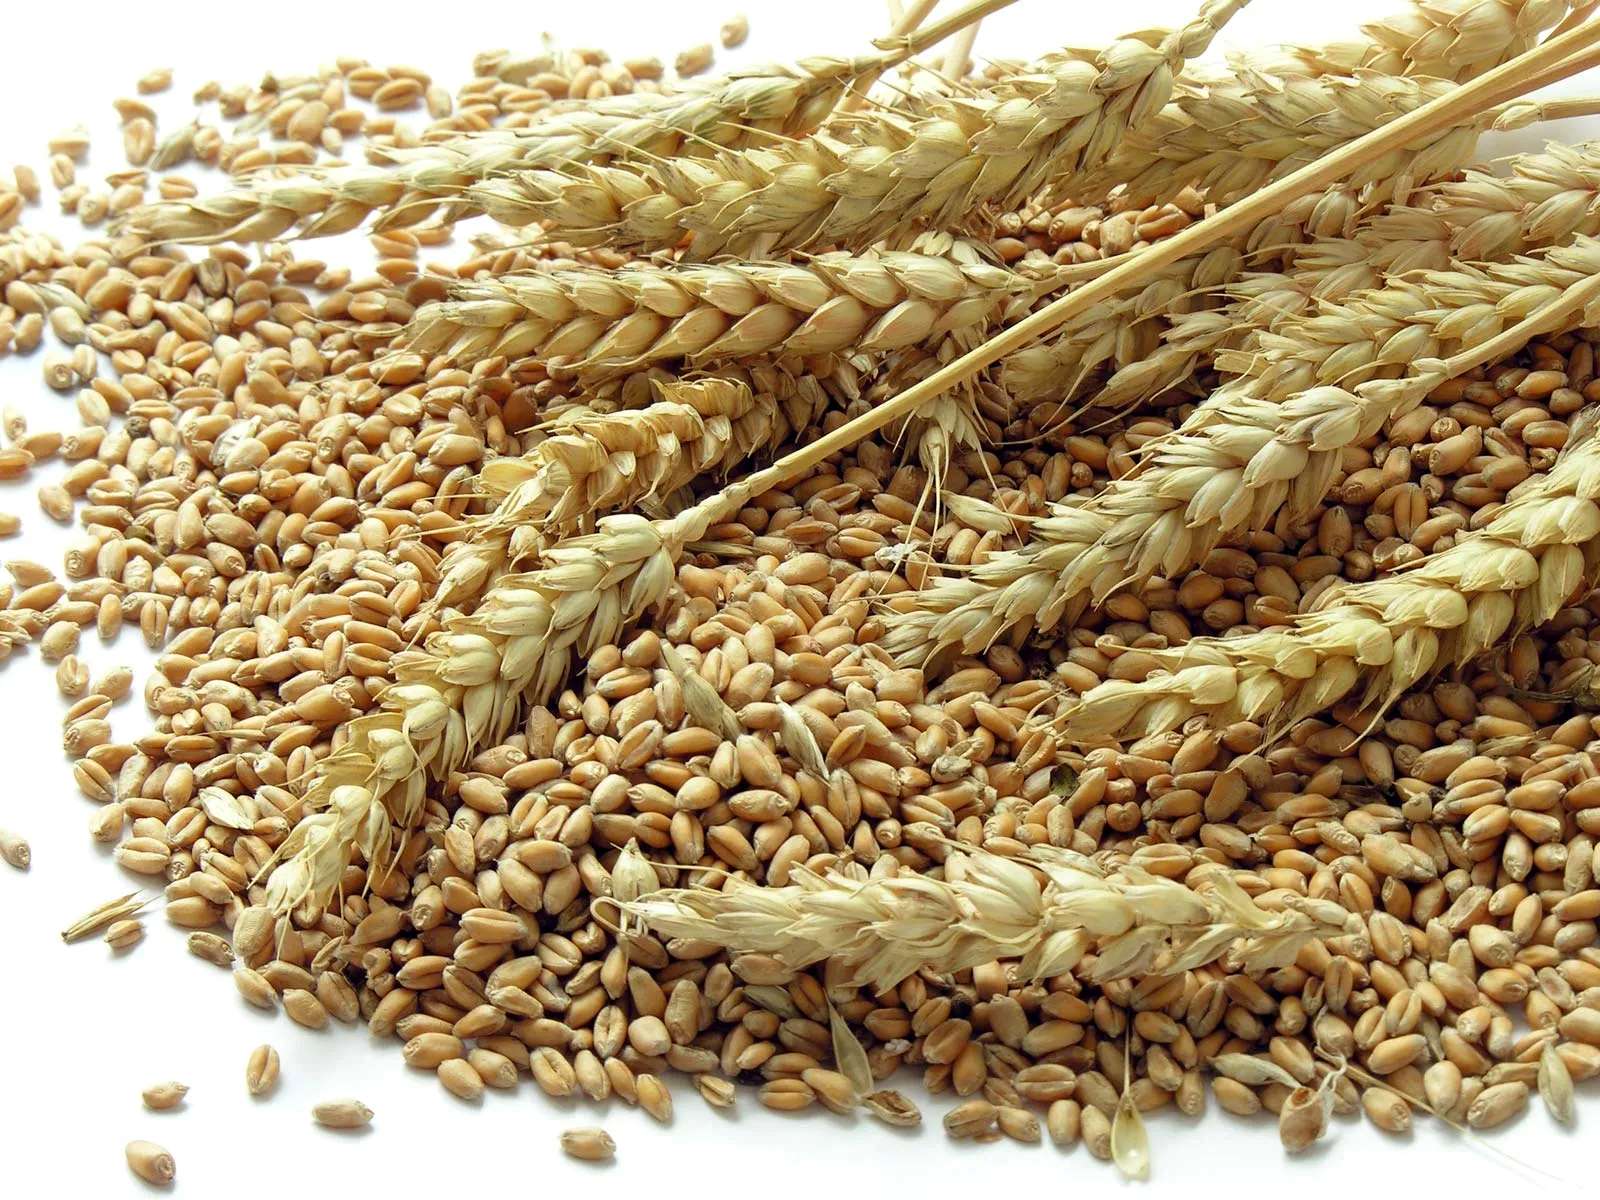 What Do Wheat Seeds Look Like